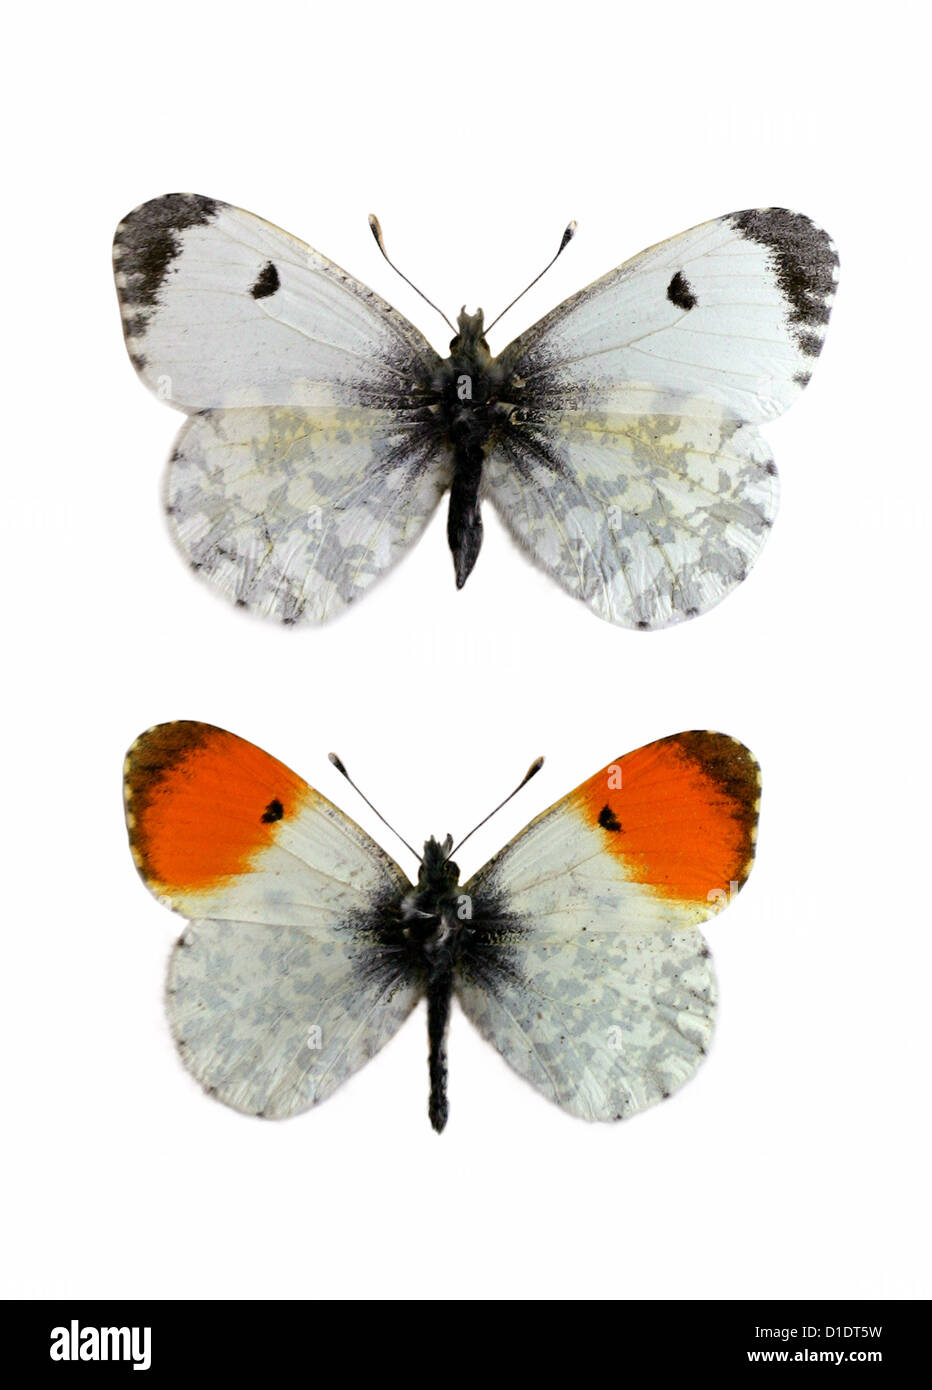 Arancio-punta farfalle, Anthocharis cardamines, Pieridae, Lepidotteri. Femmina (parte superiore), maschio (fondo). Montate i campioni. Ritaglio. Foto Stock